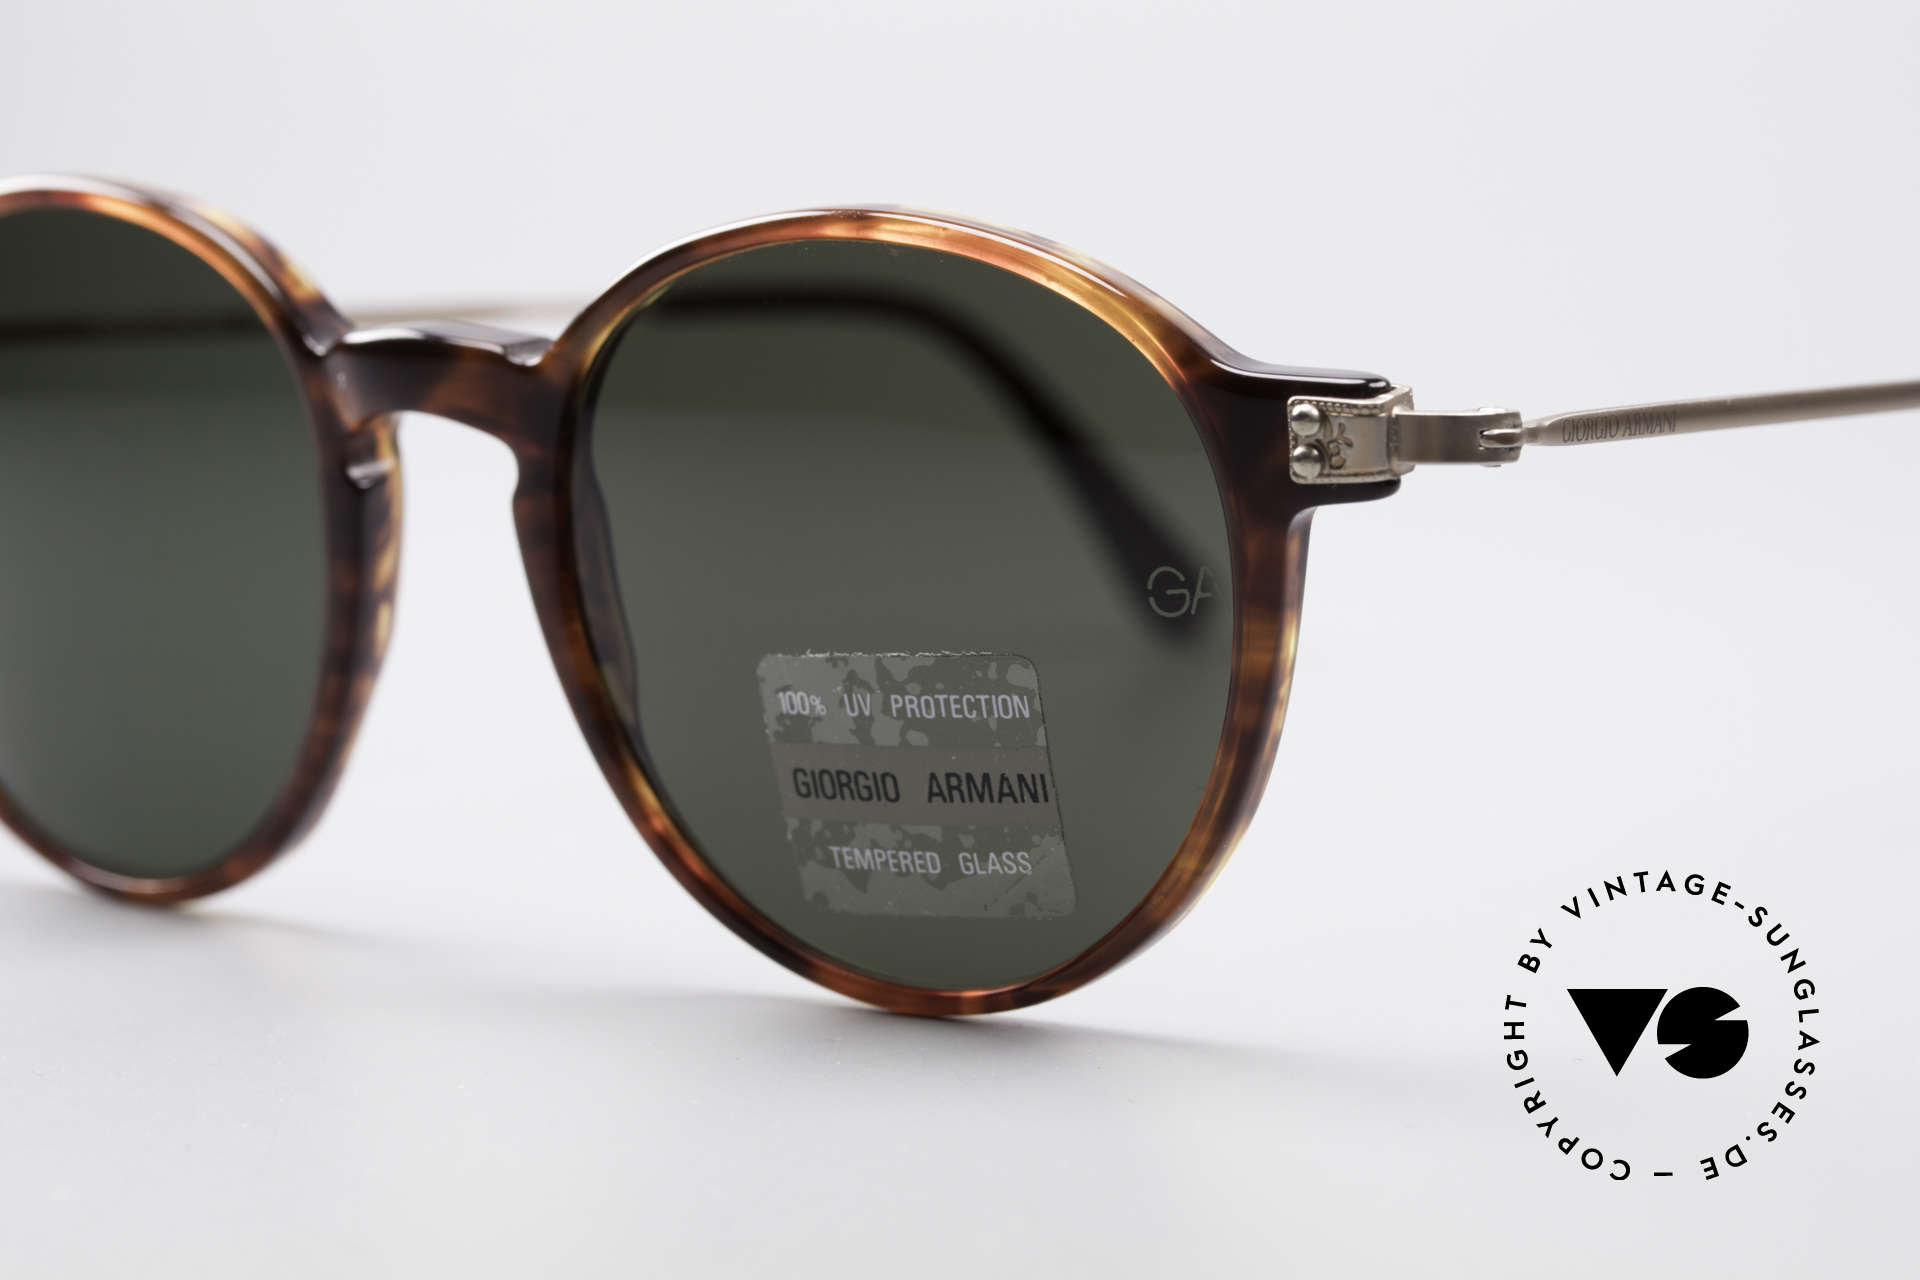 Sunglasses Giorgio Armani 358 Vintage Panto Sunglasses